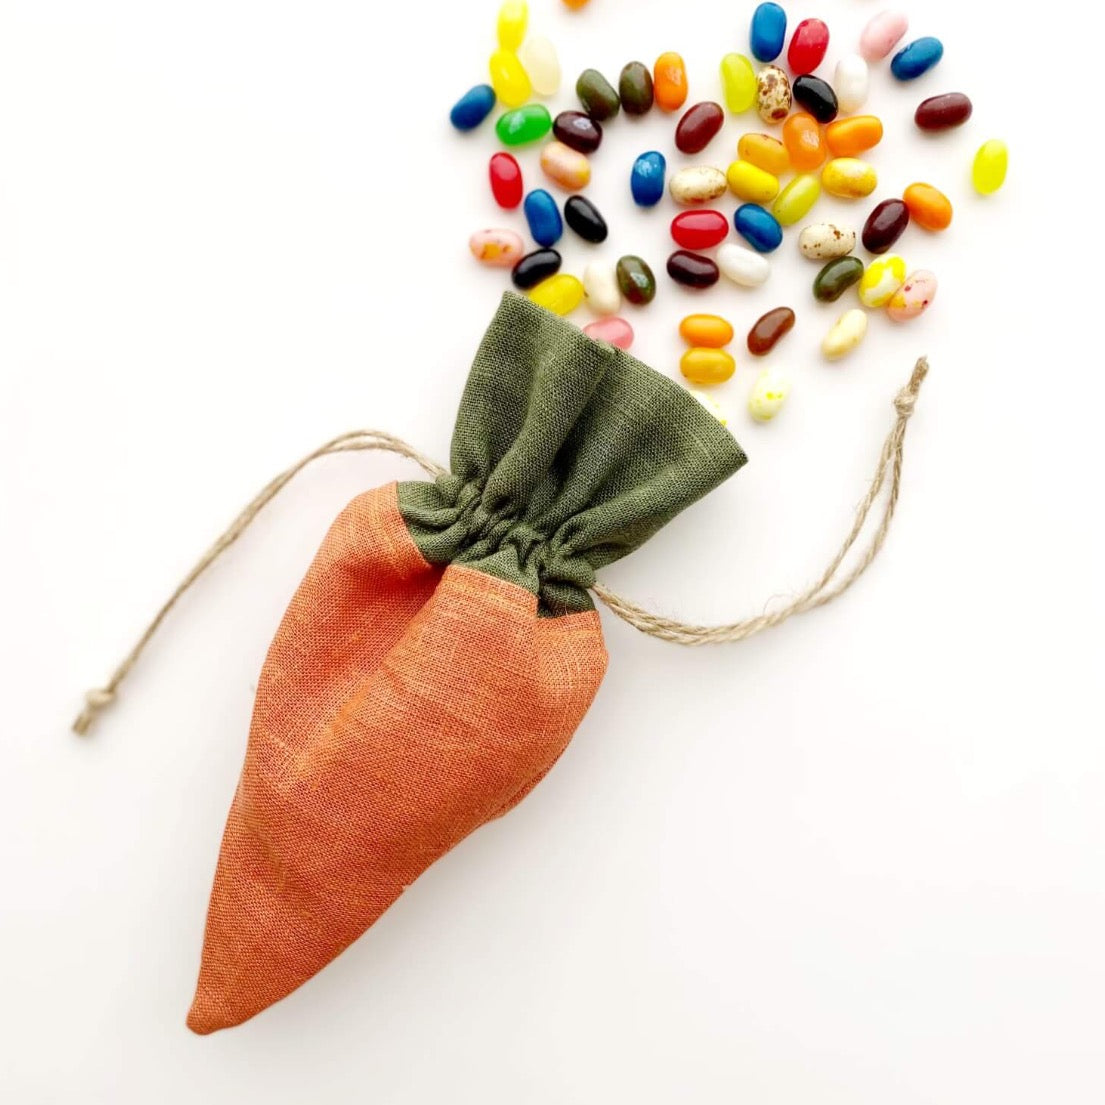 Carrot shaped treat bag for Easter baskets